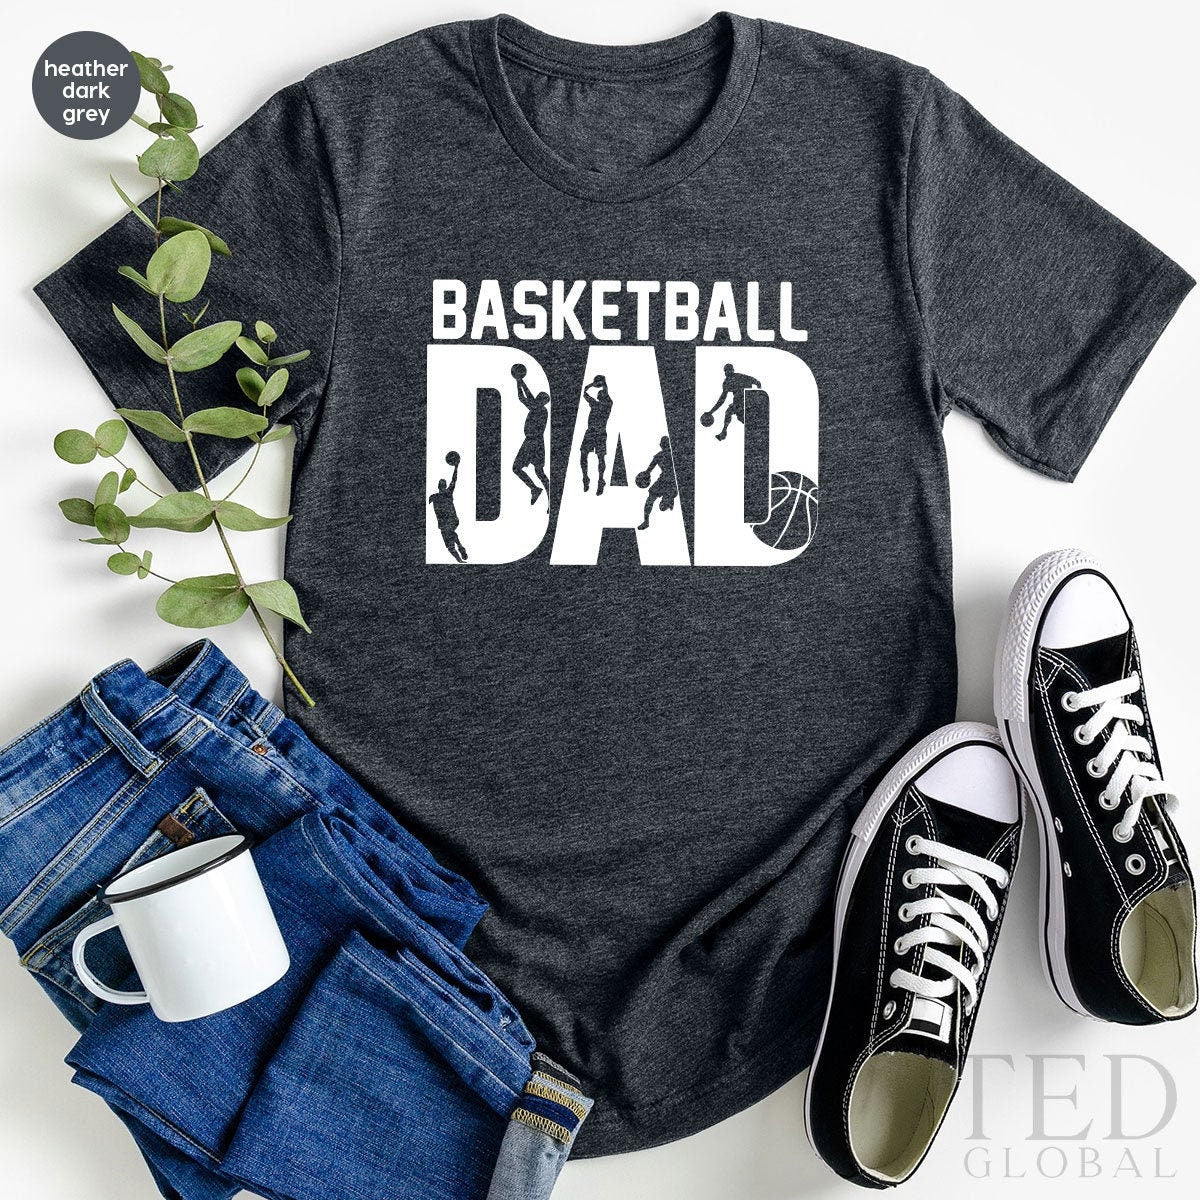 Basketball Dad Shirt, Basketball Lover TShirt, Basketball Shirt Men, Fathers Day Gift, Dad Birthday Gift, Basketball T-Shirt, Gifts For Dad - Fastdeliverytees.com